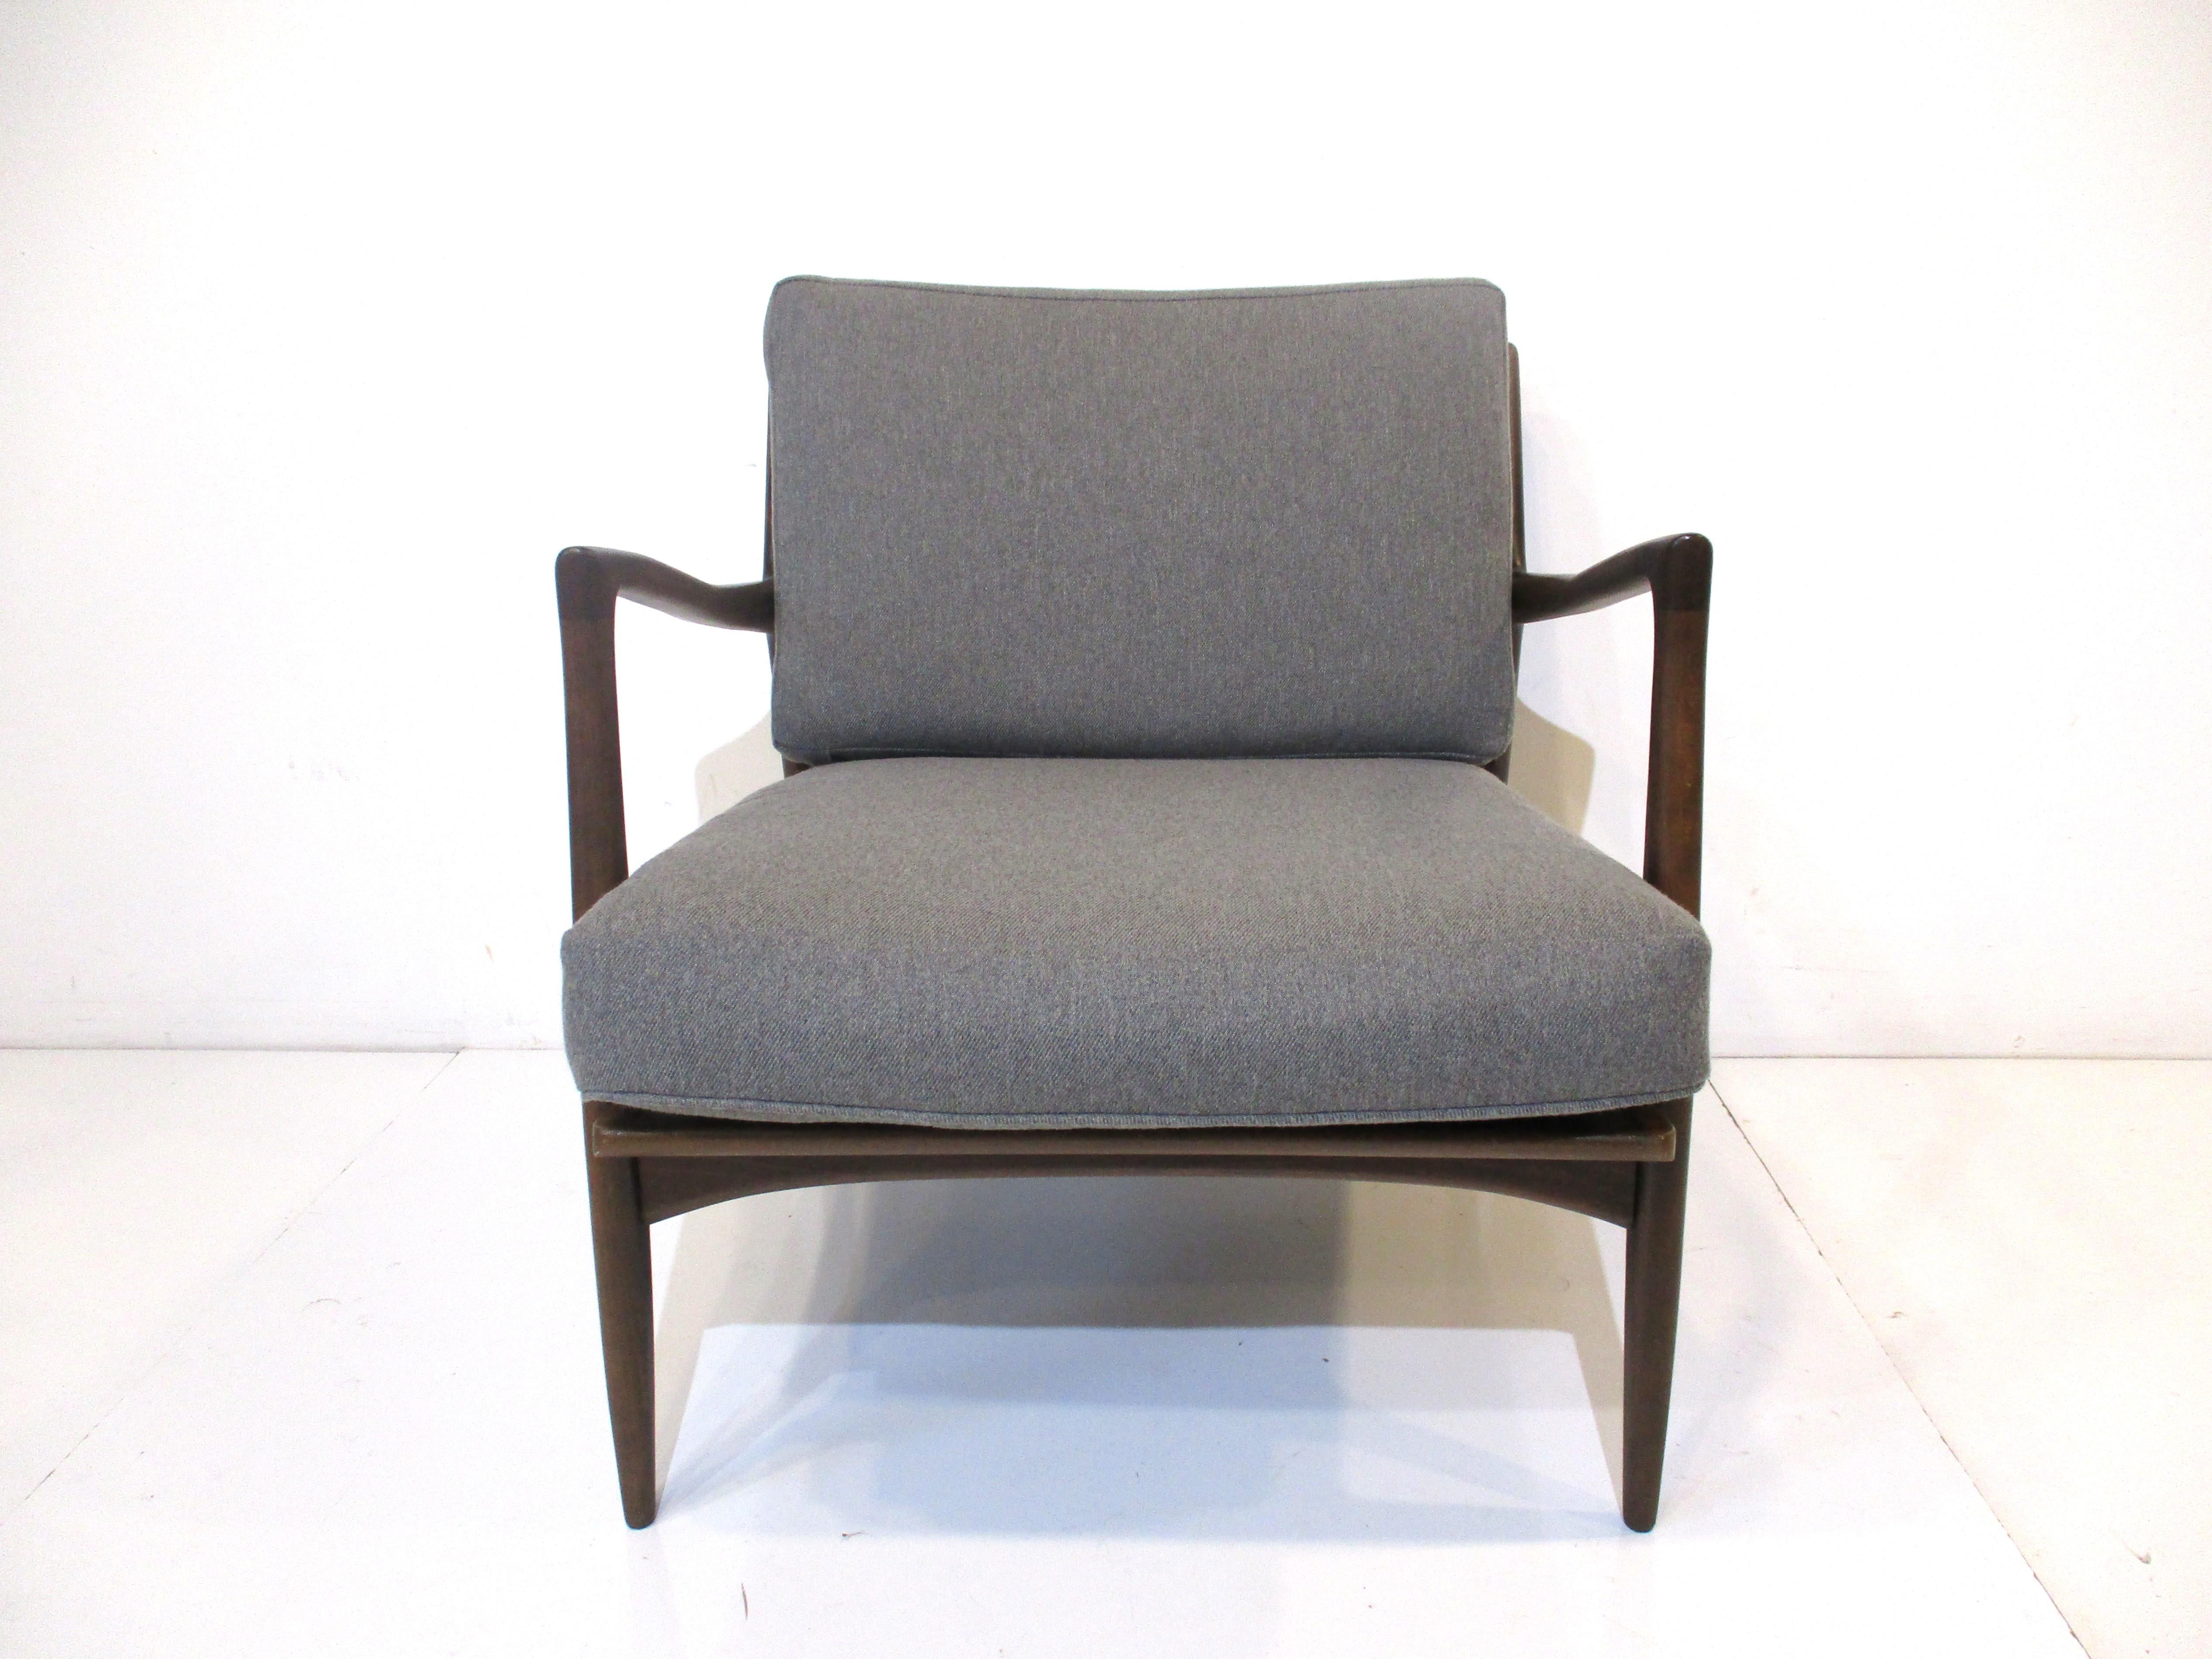 20th Century Danish Sculptural lounge Chair by I.B. Kofod Larsen